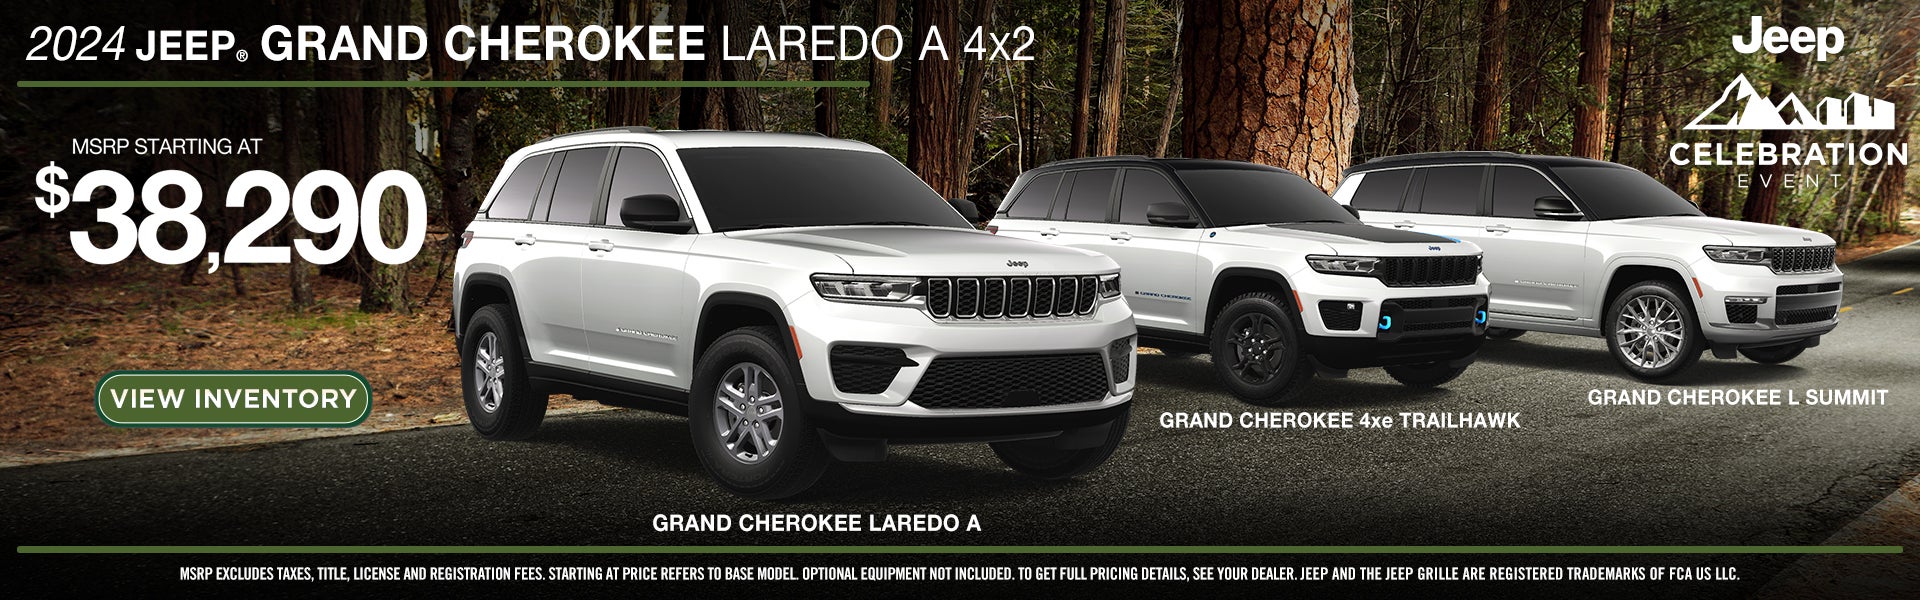 2024 Grand Cherokee Laredo A 4x2